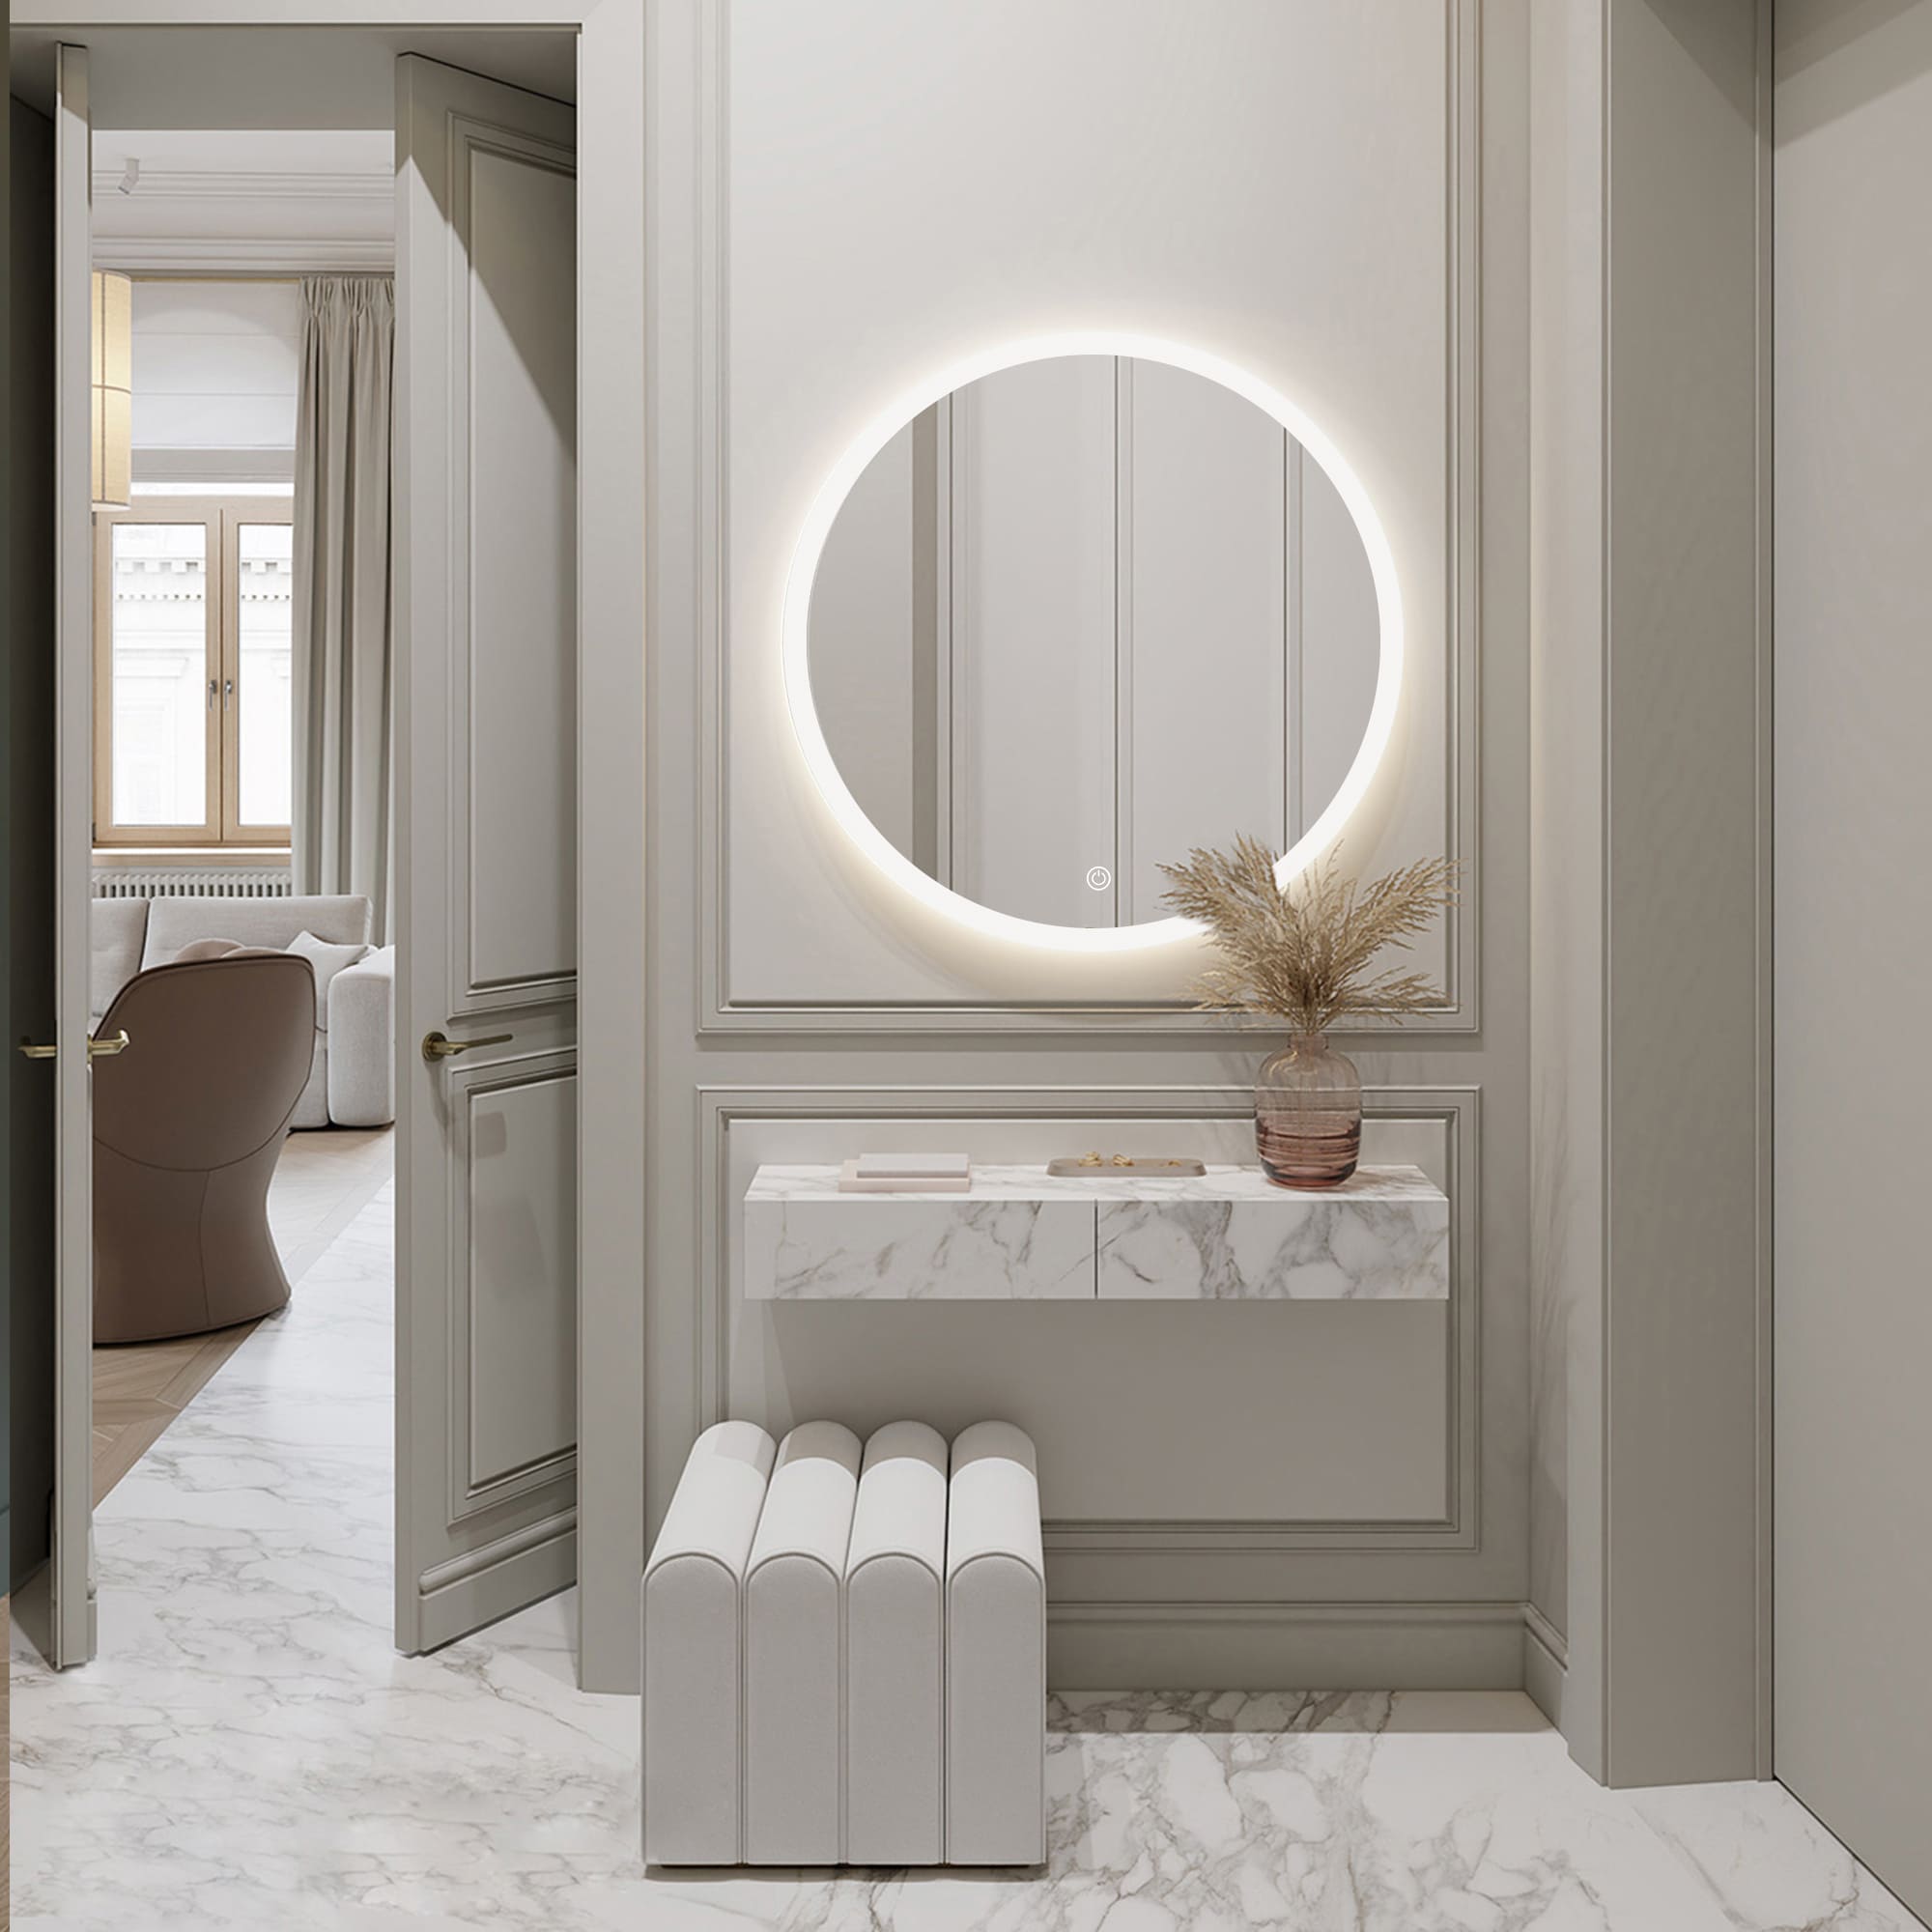 URANUS LED mirror for hallway